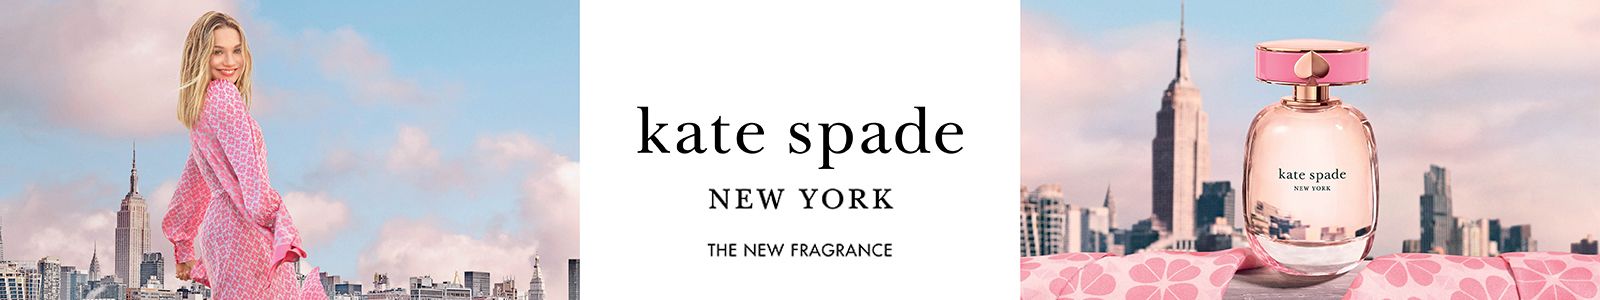 Kate spade, New York, The New Fragrance 